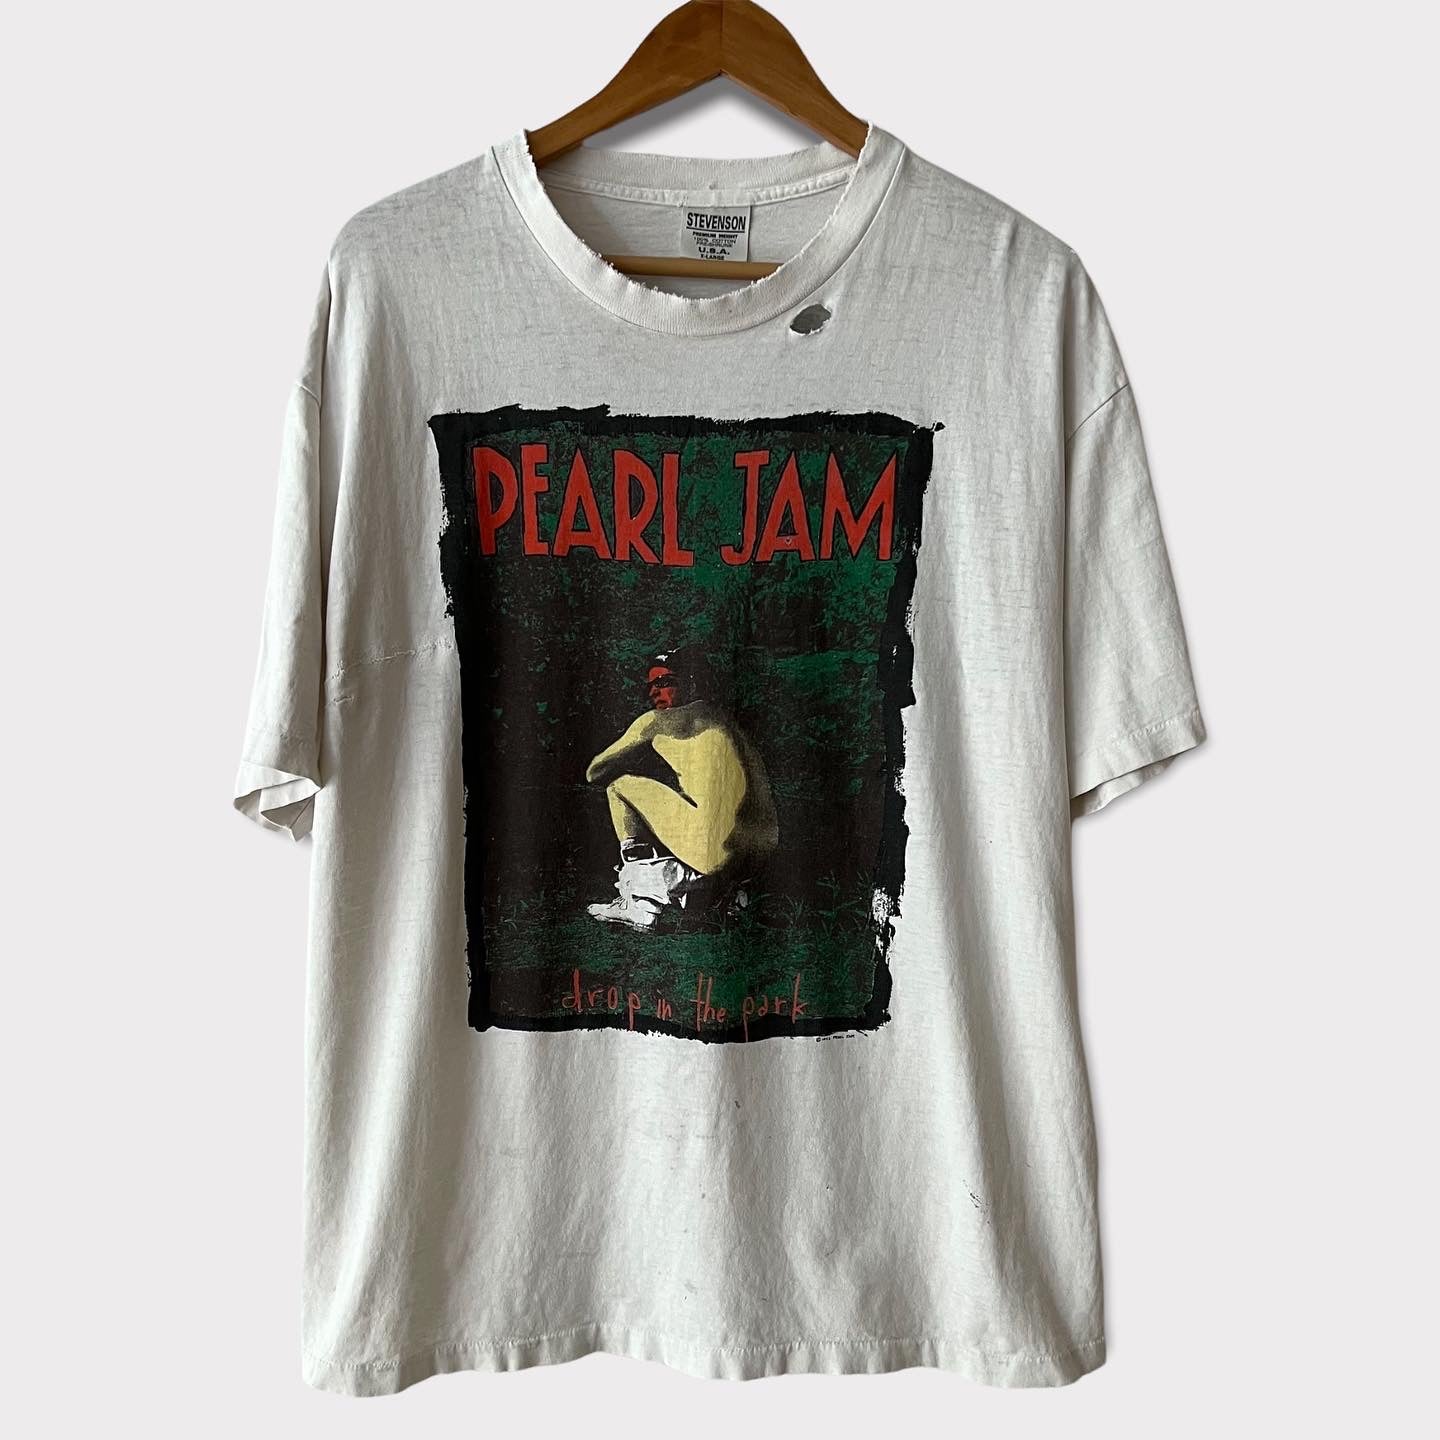 Vintage Unisex Pearl Jam T Shirt